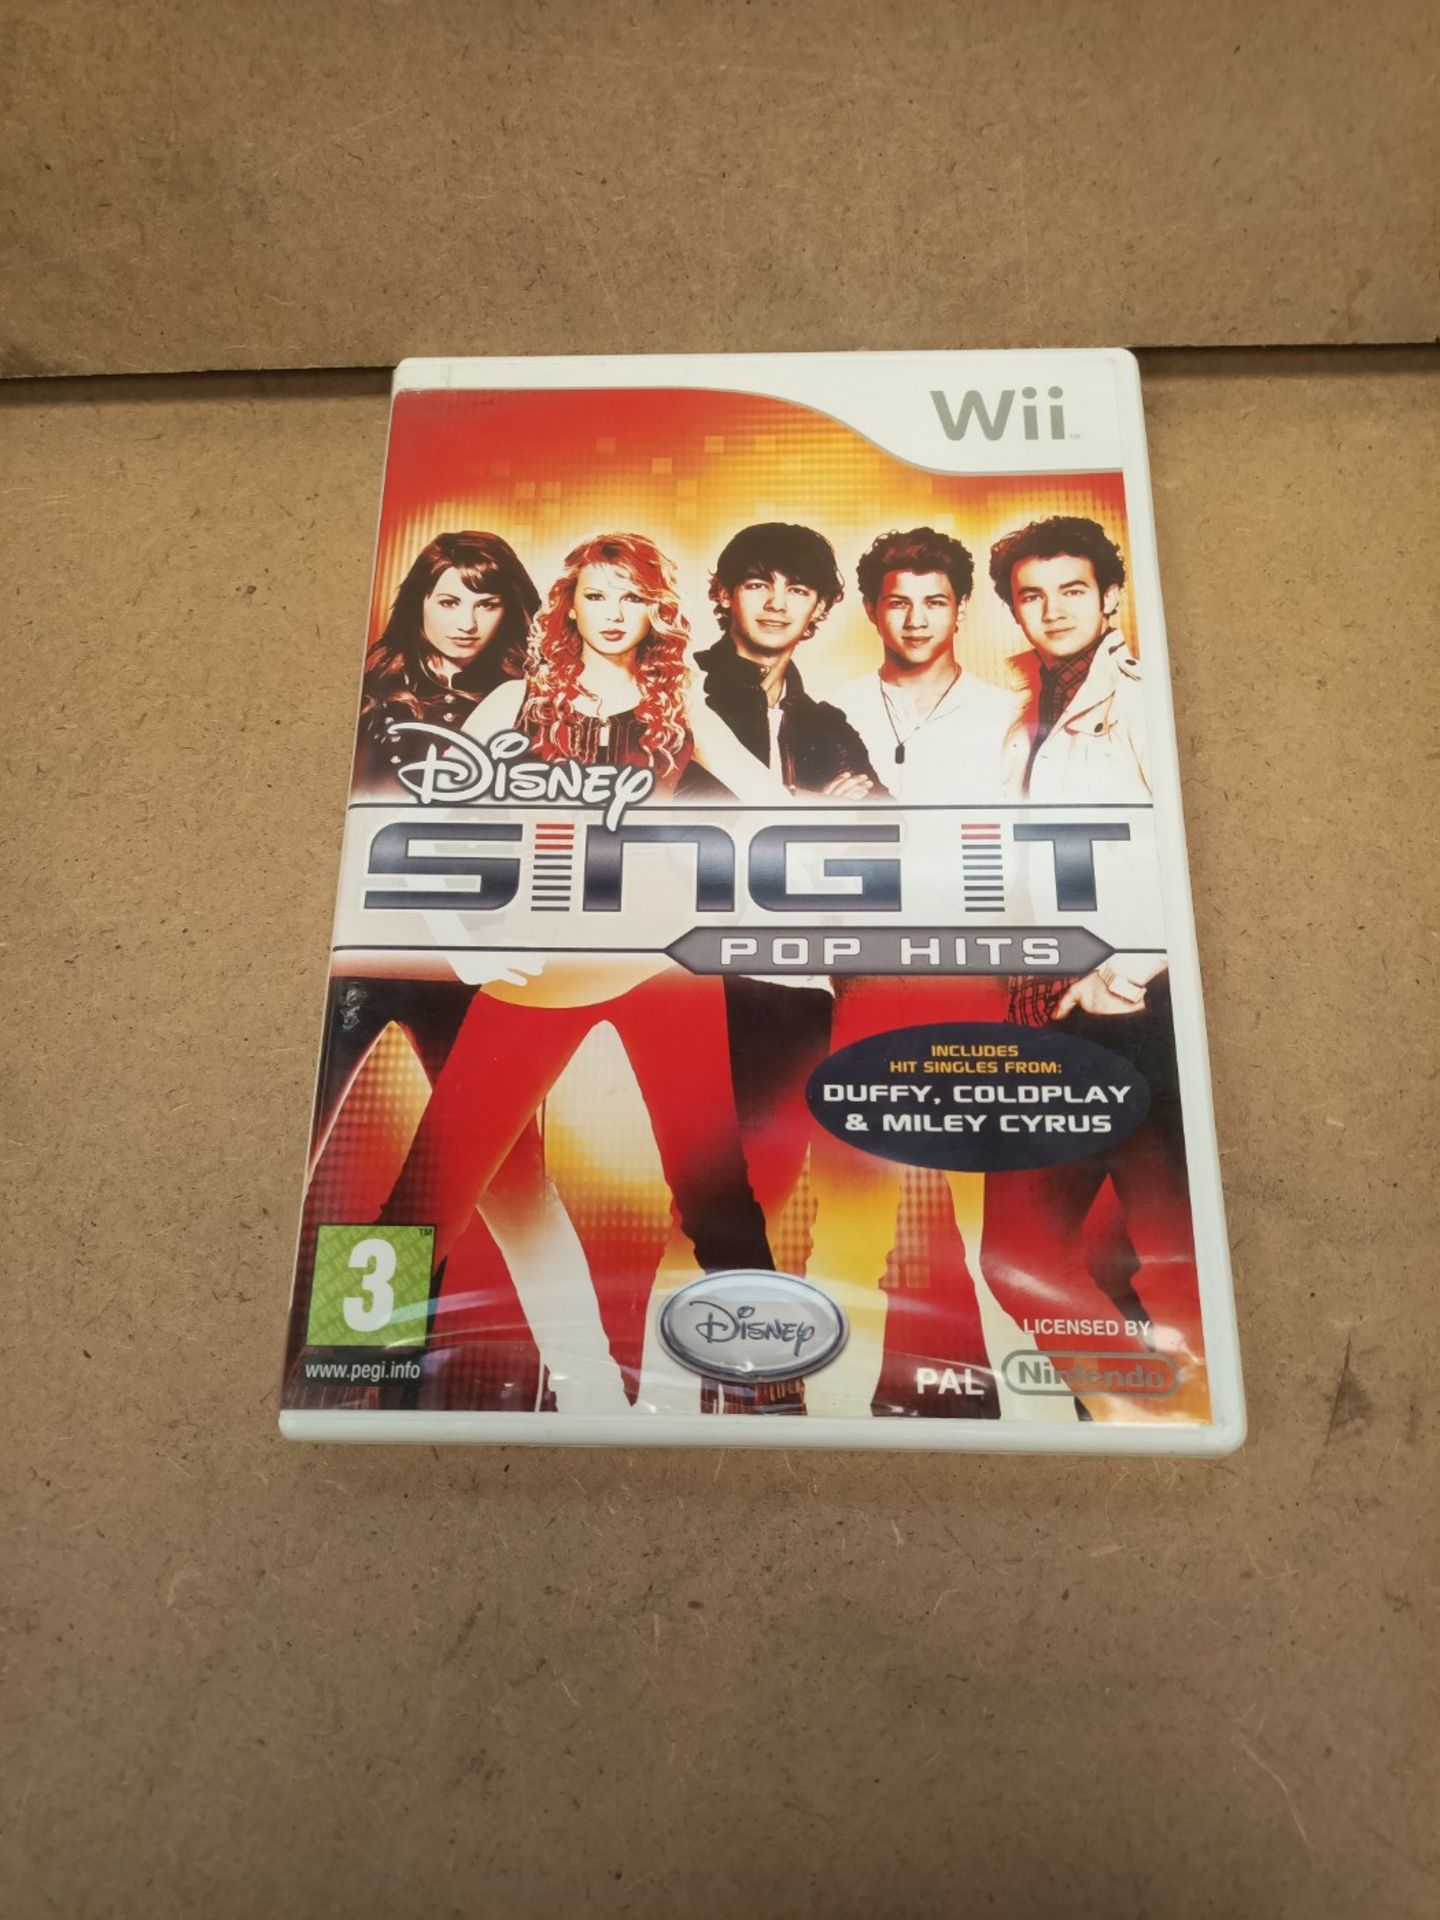 Disney Sing It: Pop Hits (Wii) - Image 2 of 3